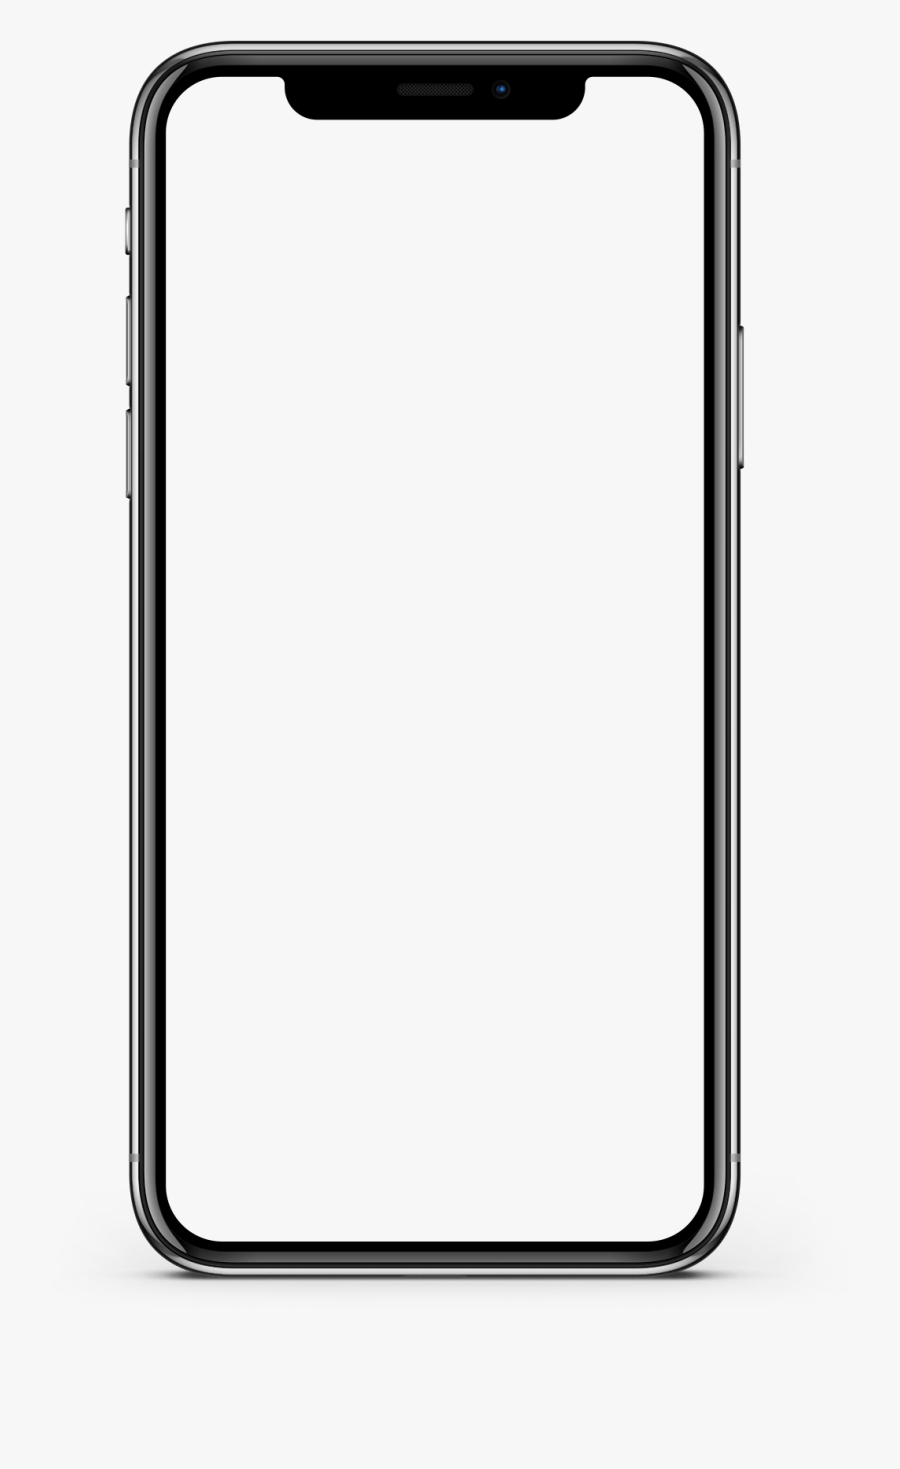 Iphone X Screen Mockup - Iphone 10 Mockup Png, Transparent Clipart